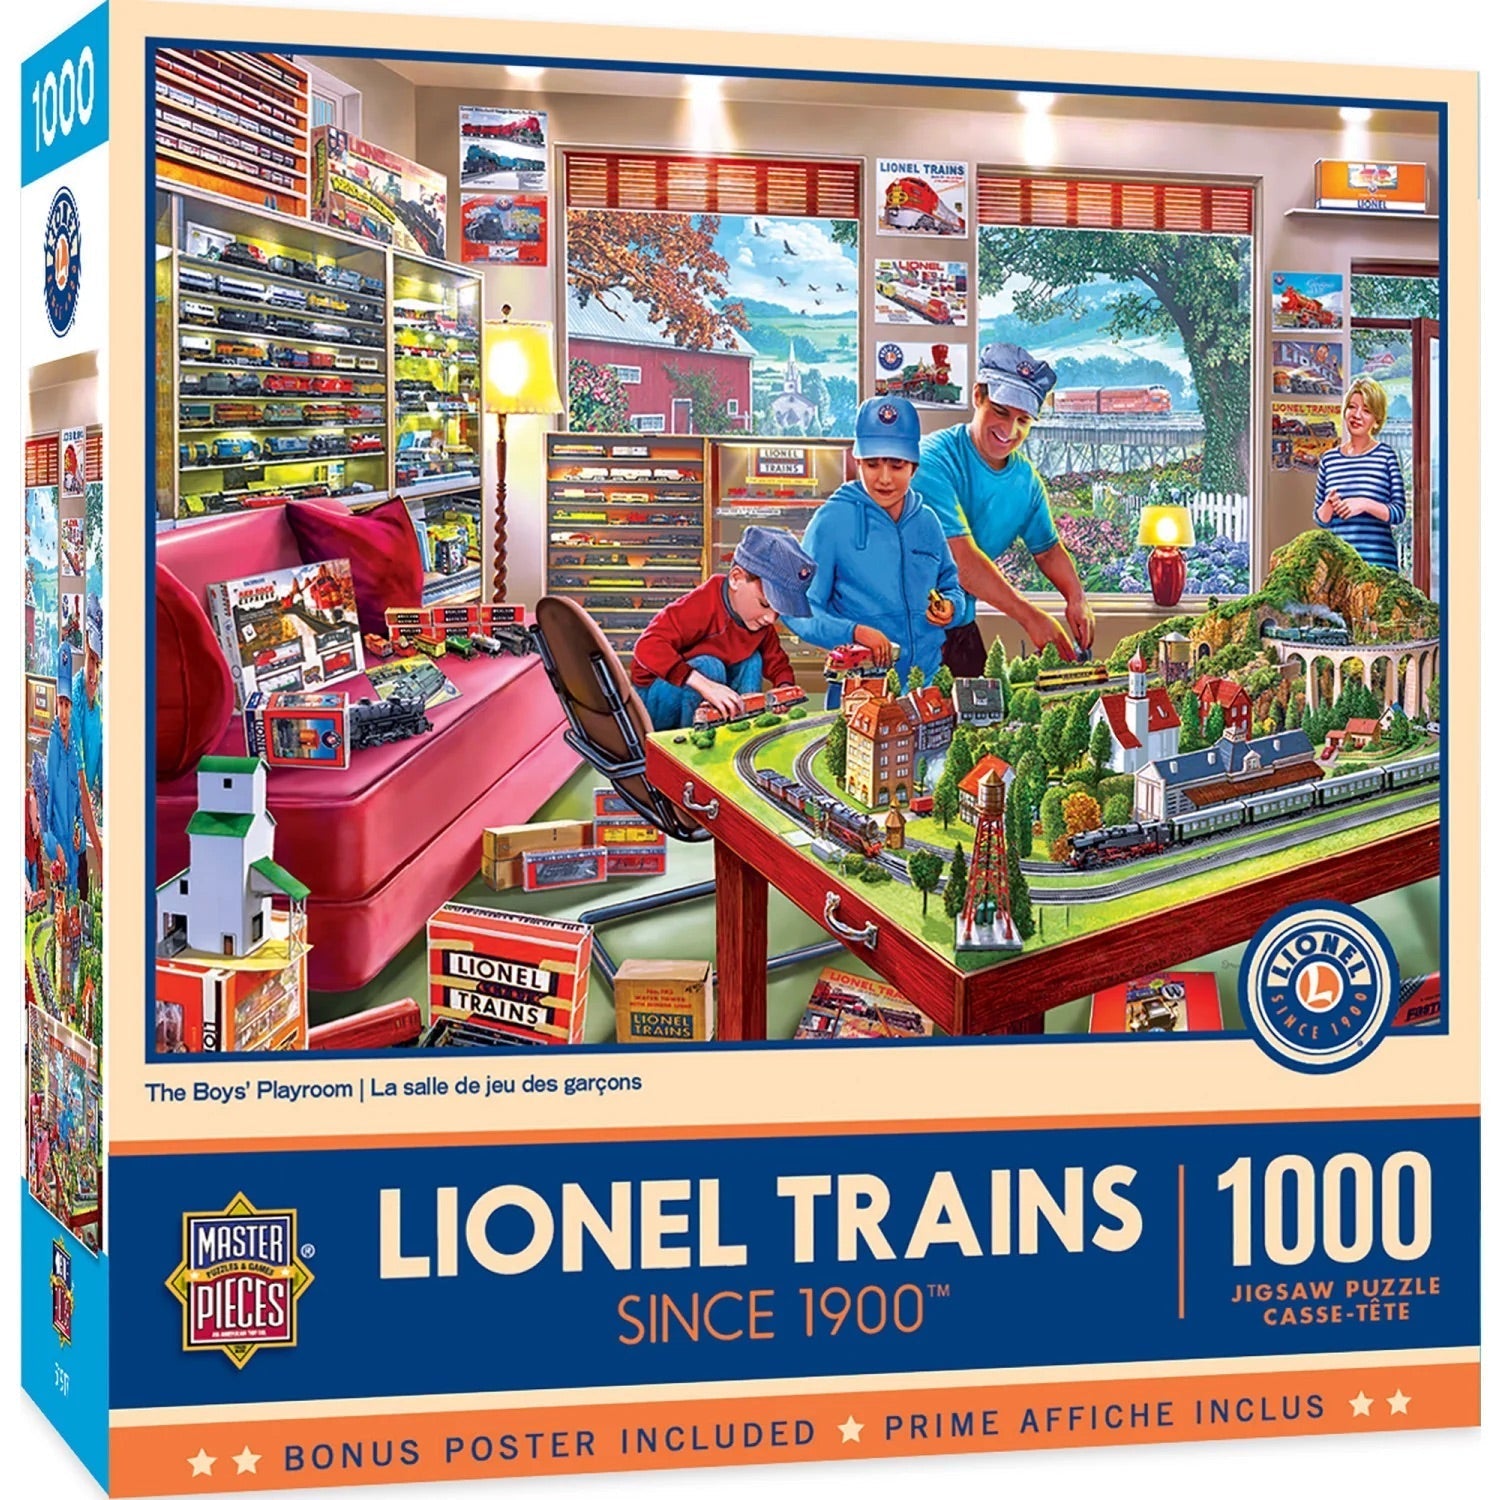  Lionel Trains - The Boy's Playroom- 1000 Pcs Jigsaw Puzzle